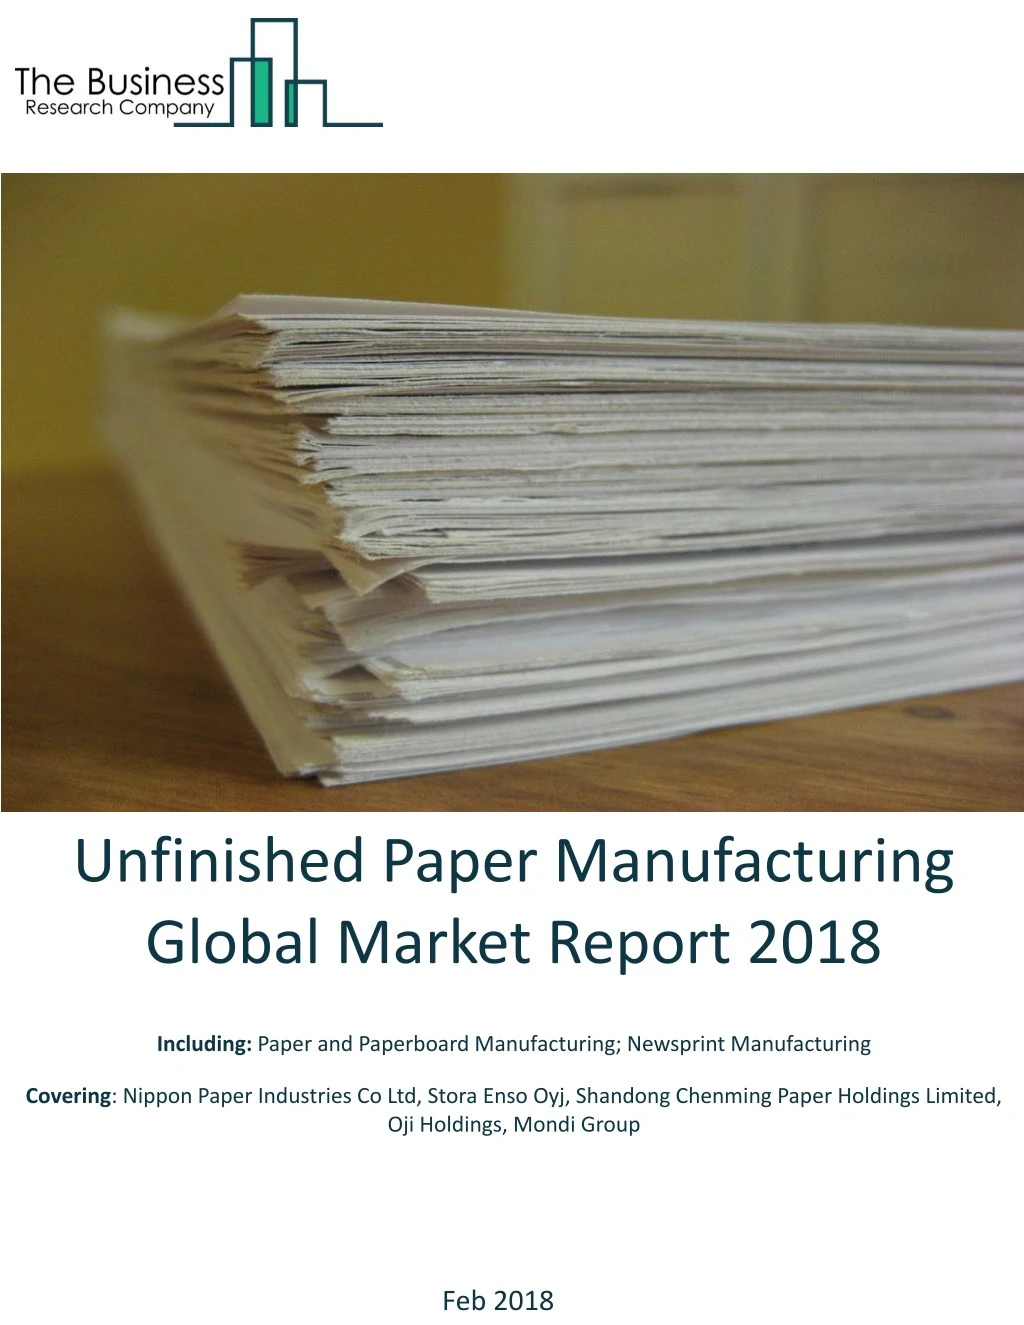 unfinished paper manufacturing global market